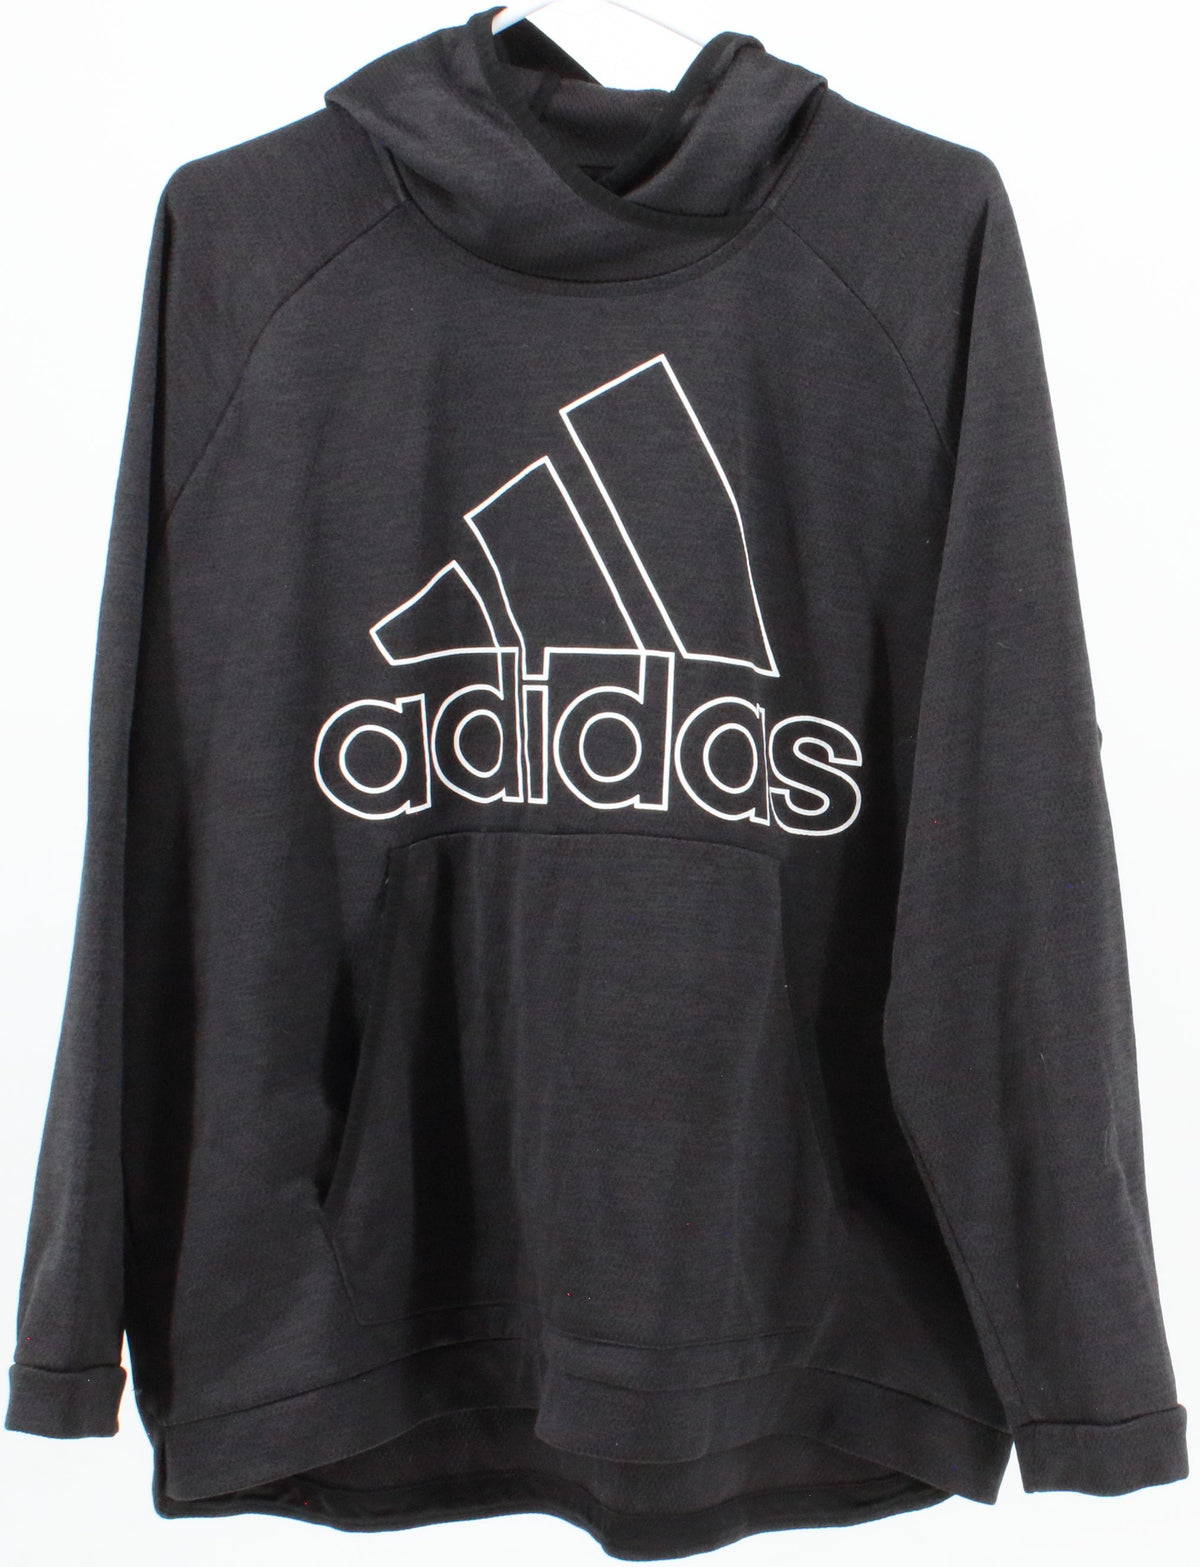 Adidas Black Hooded Sweatshirt With White Front Logo